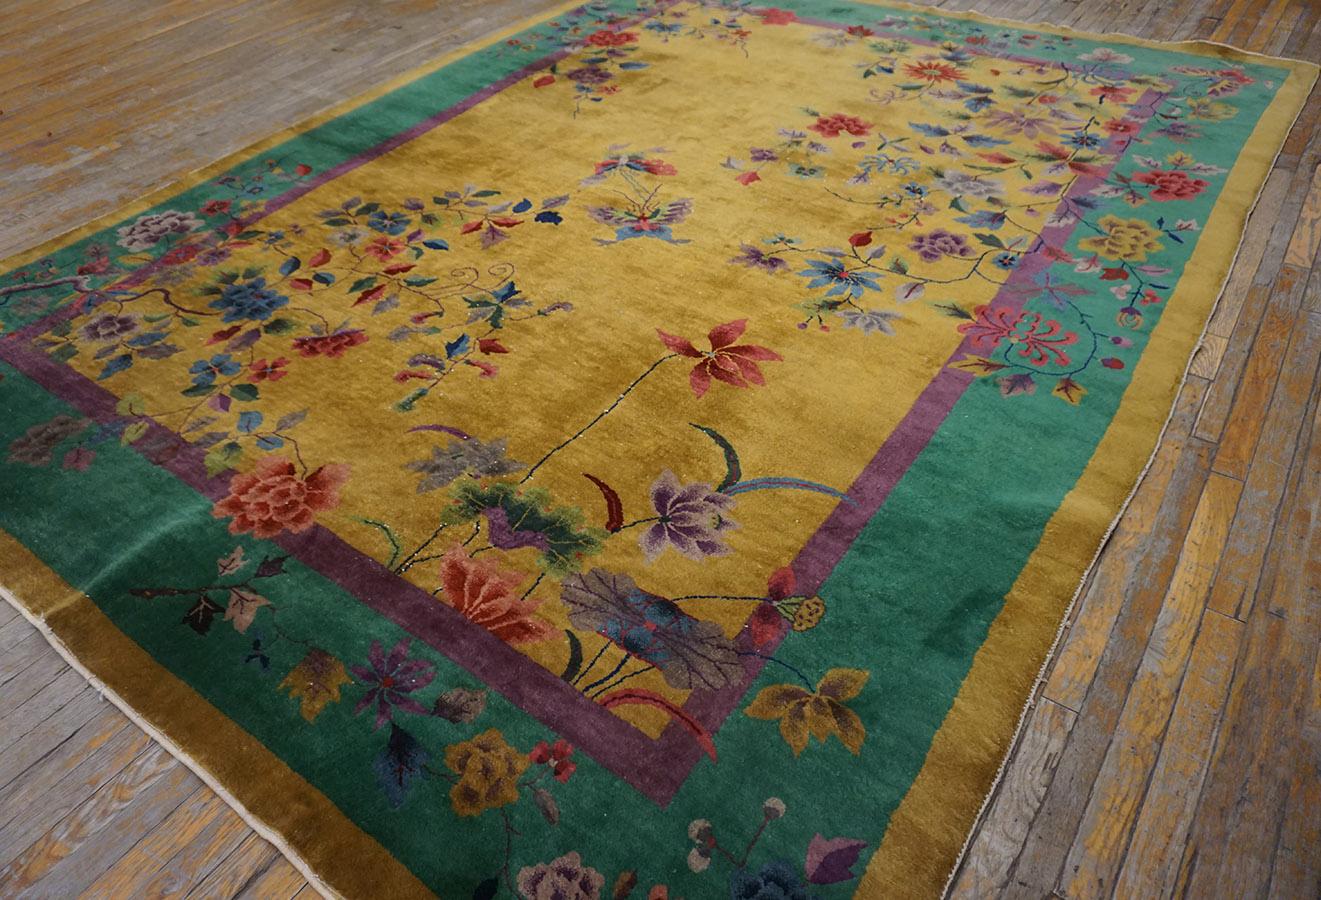 1920s Chinese Art Deco Carpet by Nichols Workshop
9'8